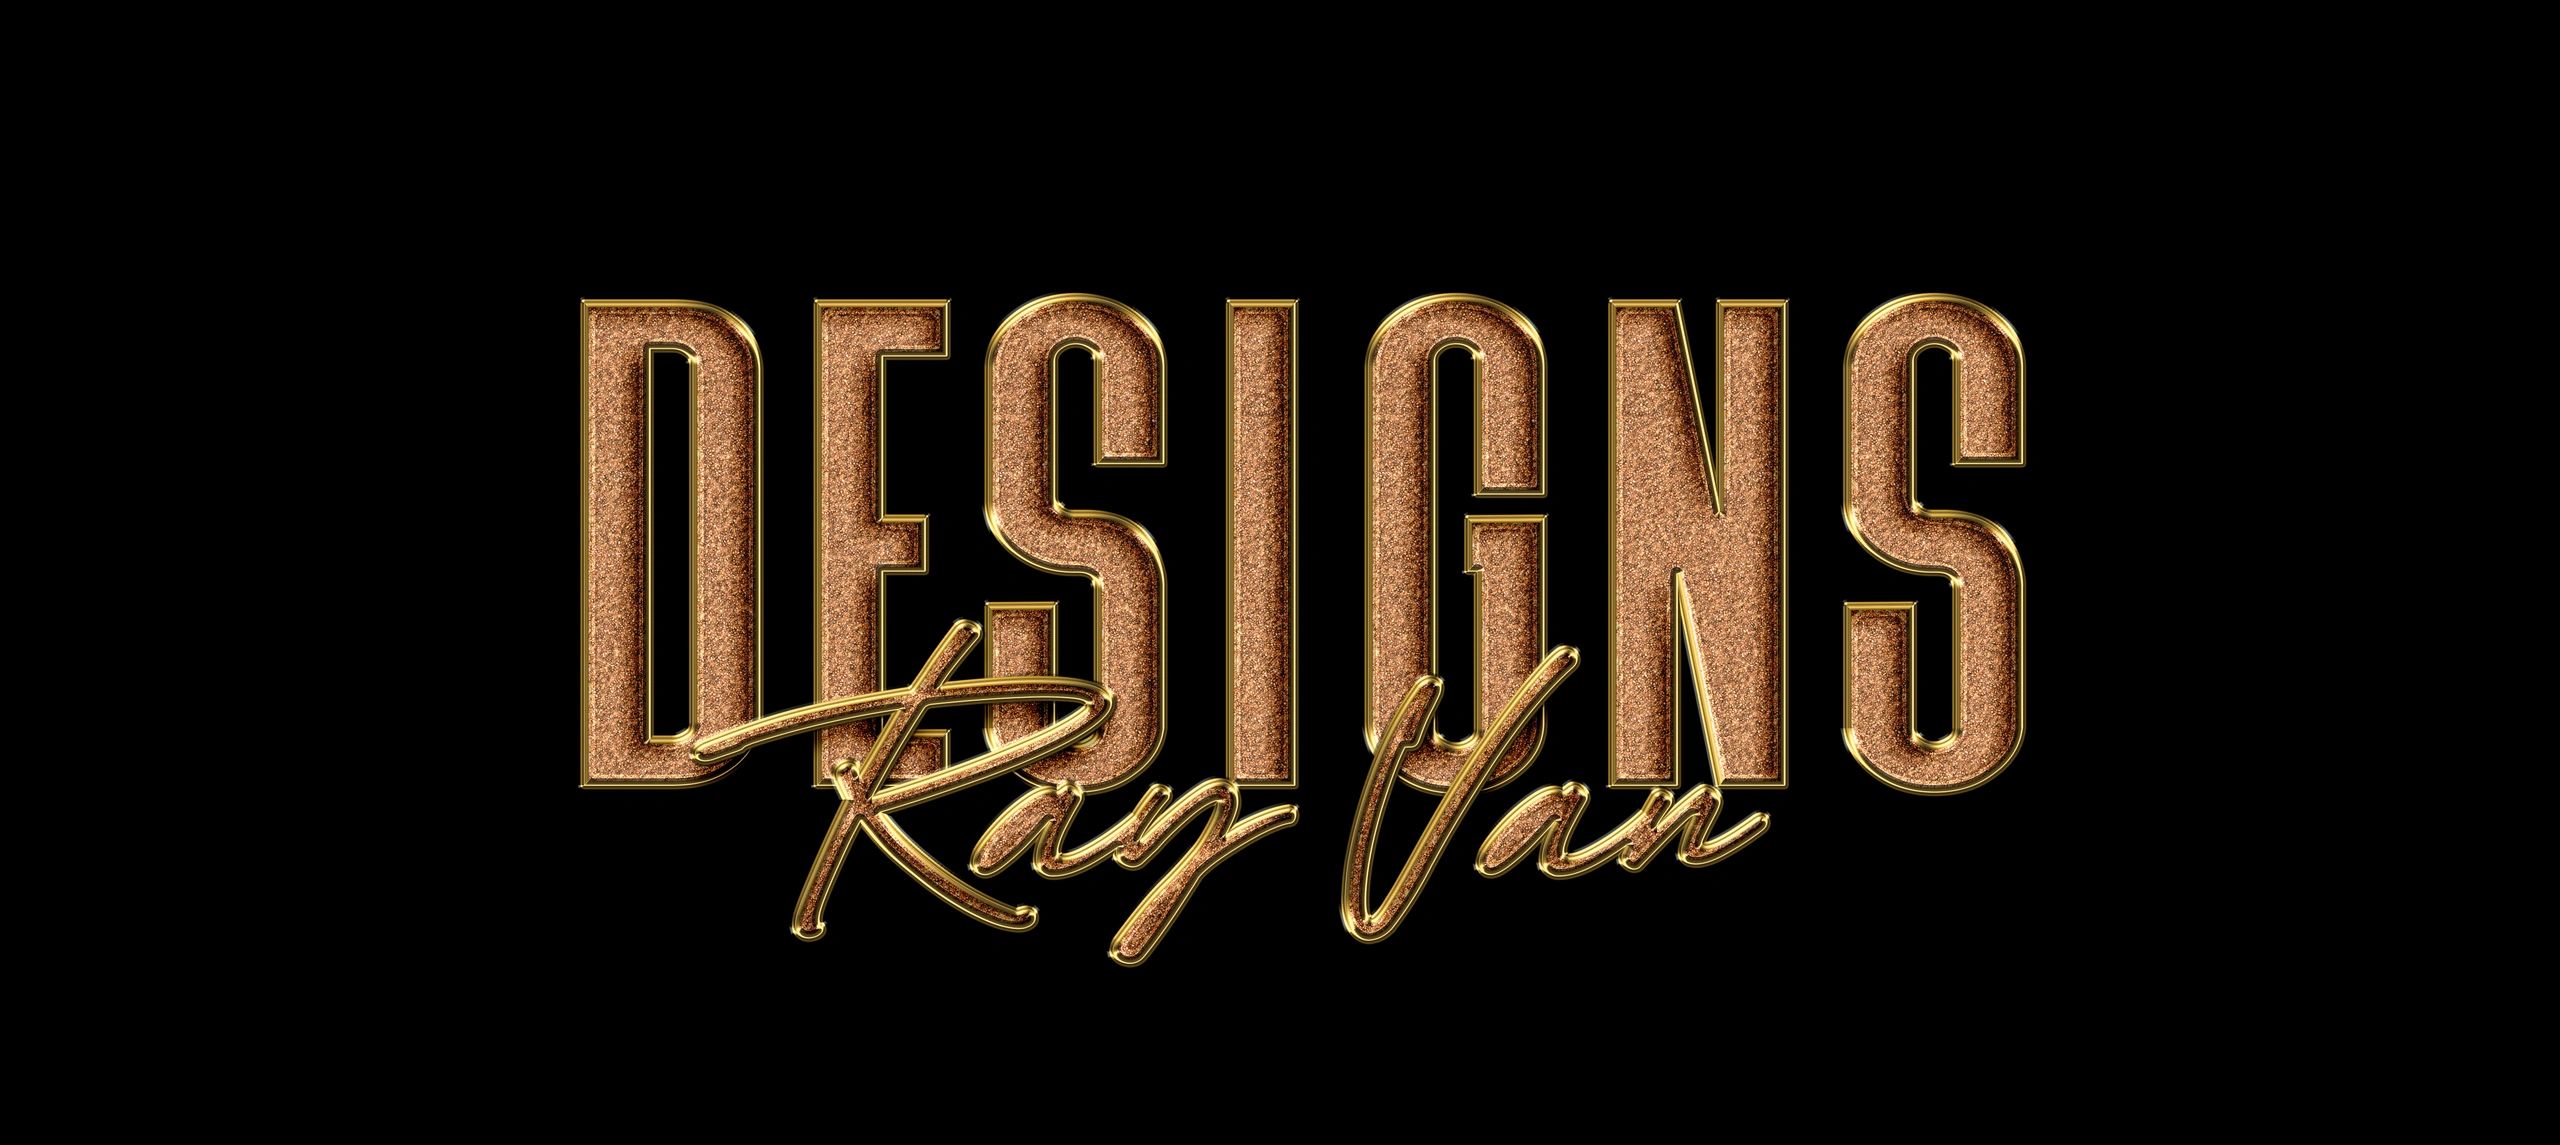 Ray Designs